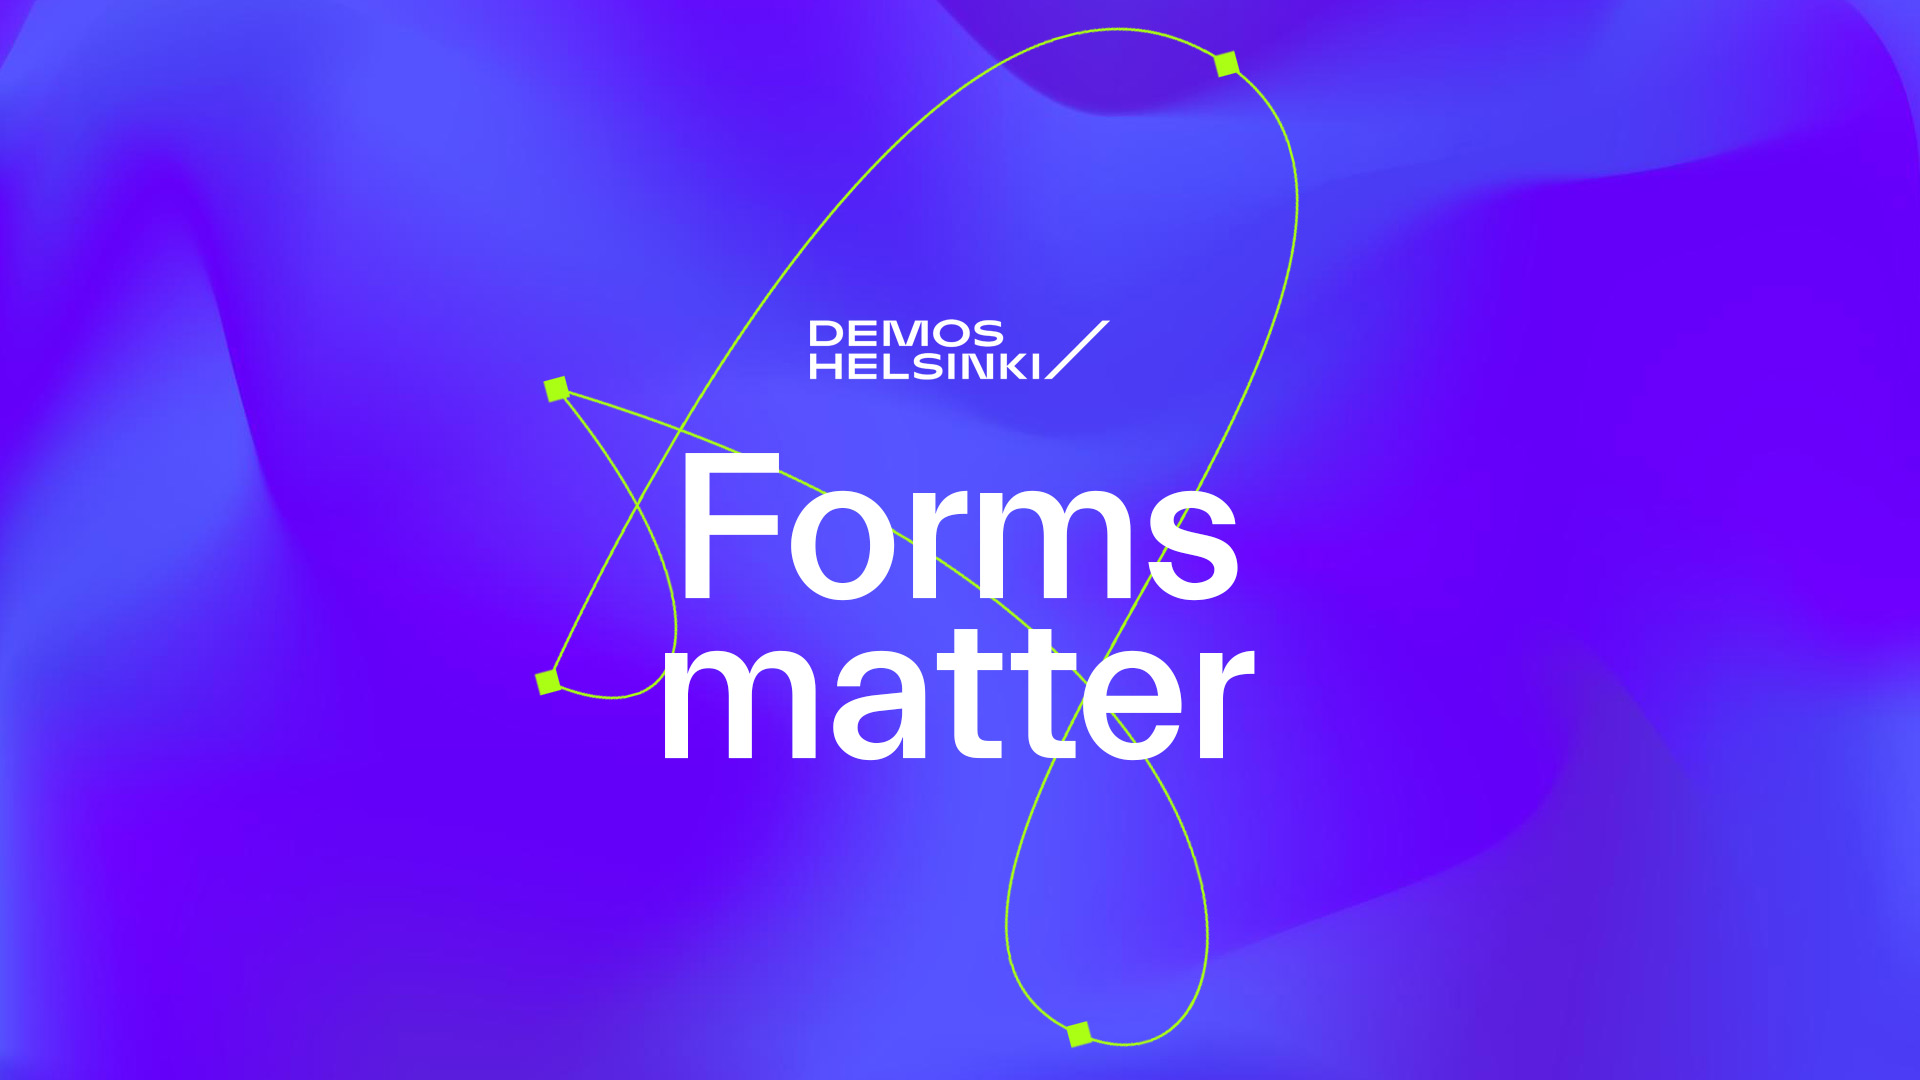 Forms matter